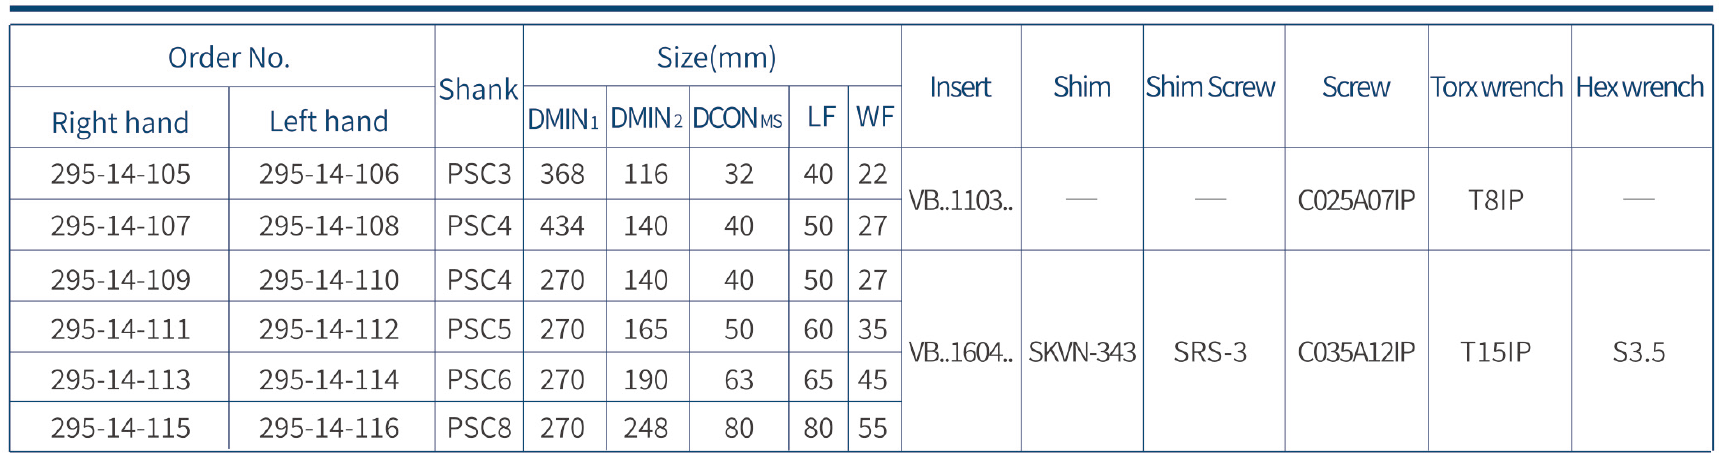 Harlingen Psc Mihodina Fitaovana SvjbrL Precision Coolant Design, Coolant Pressure 150 Bar